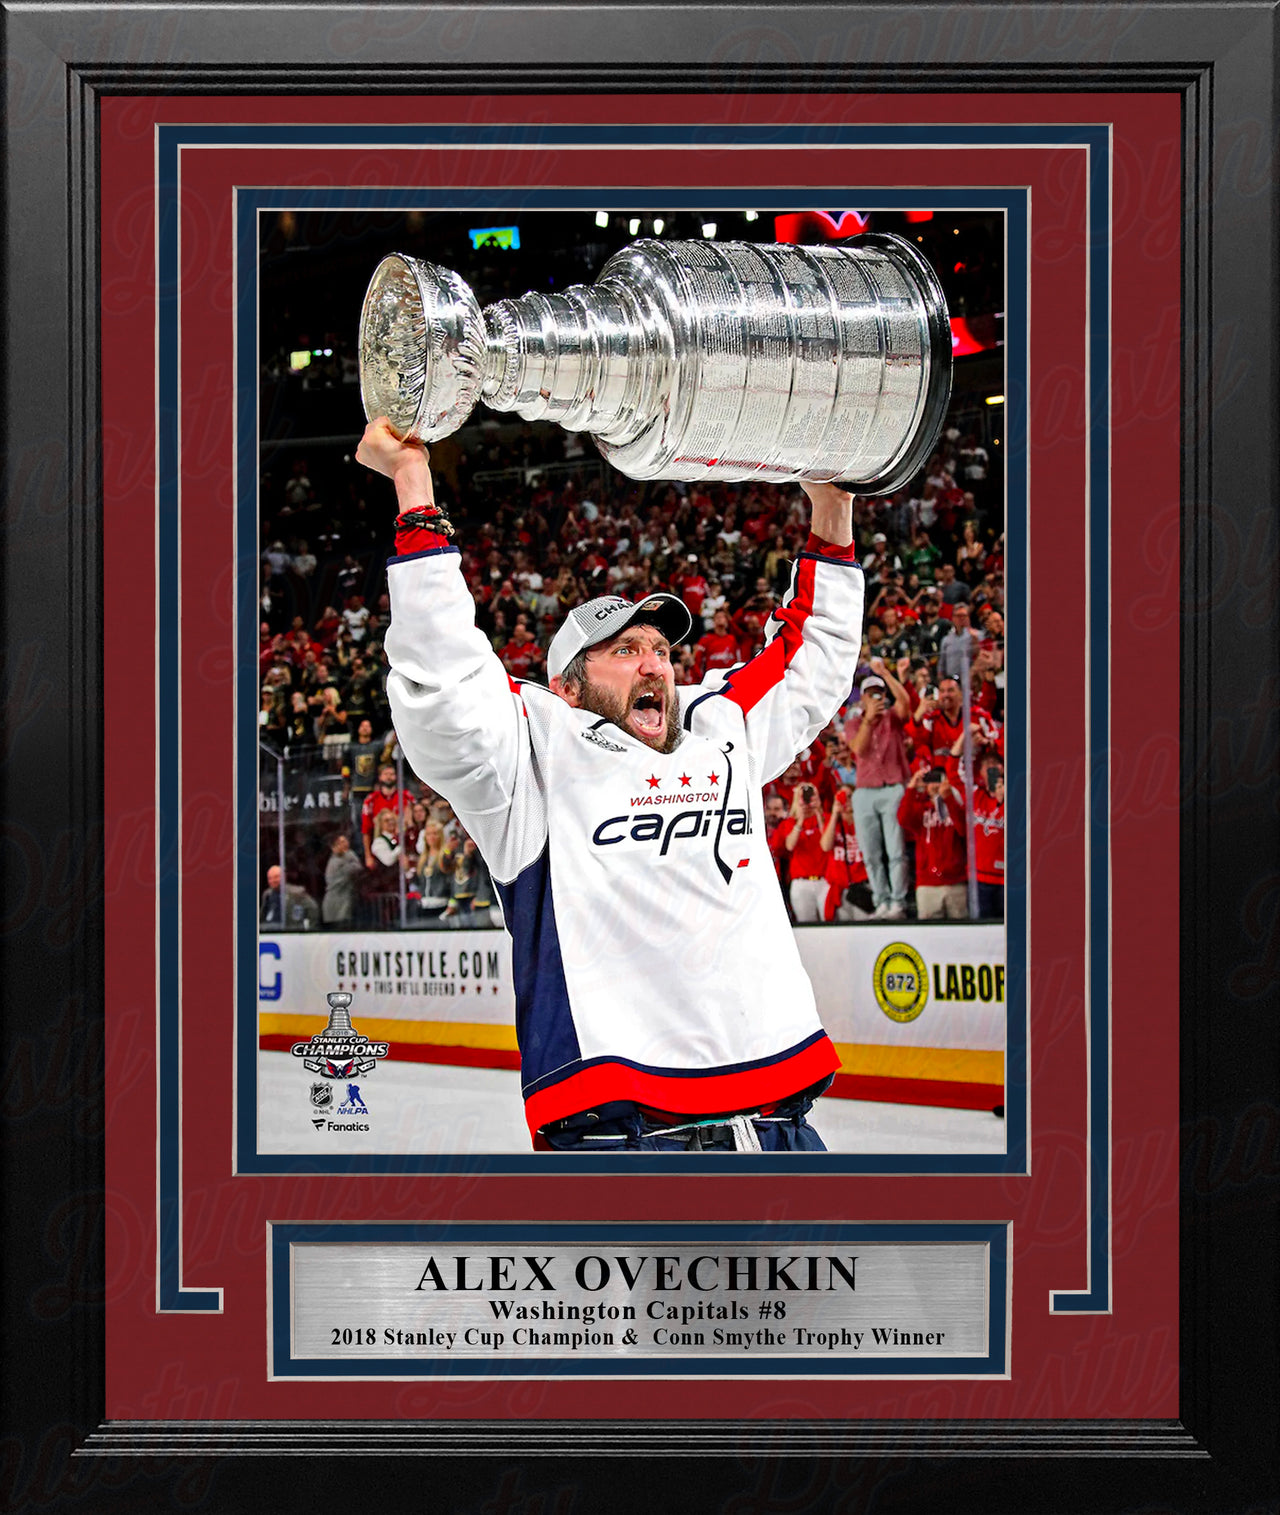 Alex Ovechkin Washington Capitals 2018 Stanley Cup Champions 8" x 10" Framed Hockey Photo - Dynasty Sports & Framing 